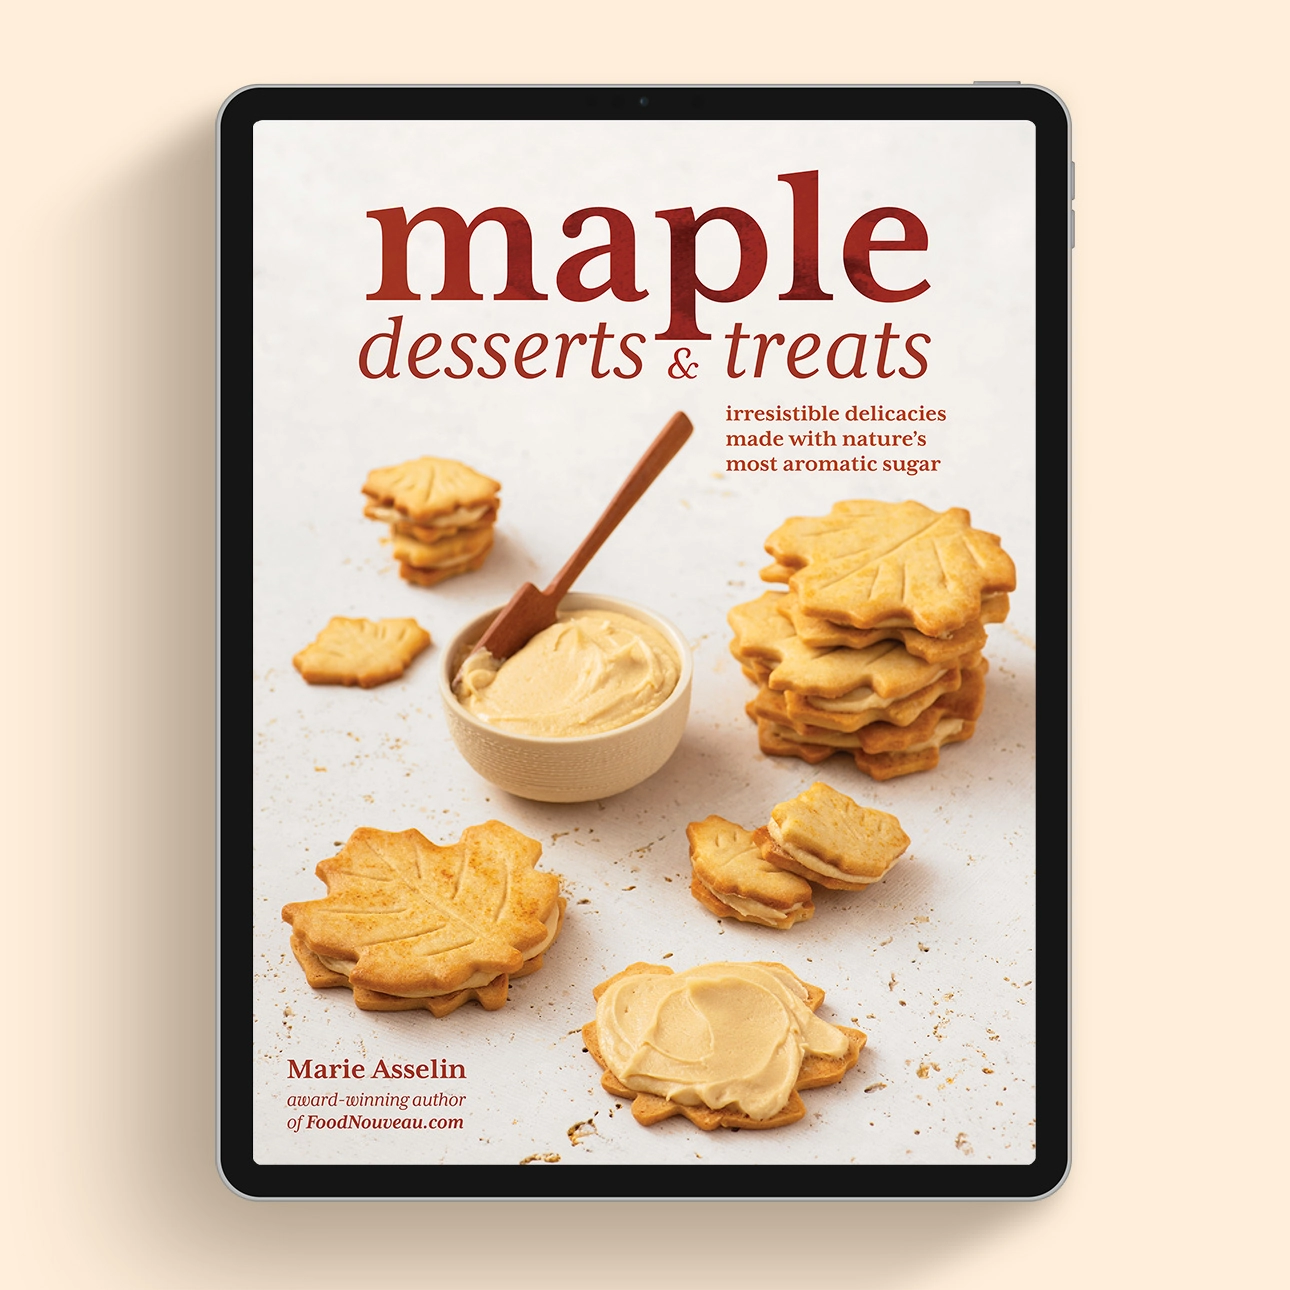 Maple Desserts & Treats, a recipe eBook by award-winning author of FoodNouveau.com, Marie Asselin